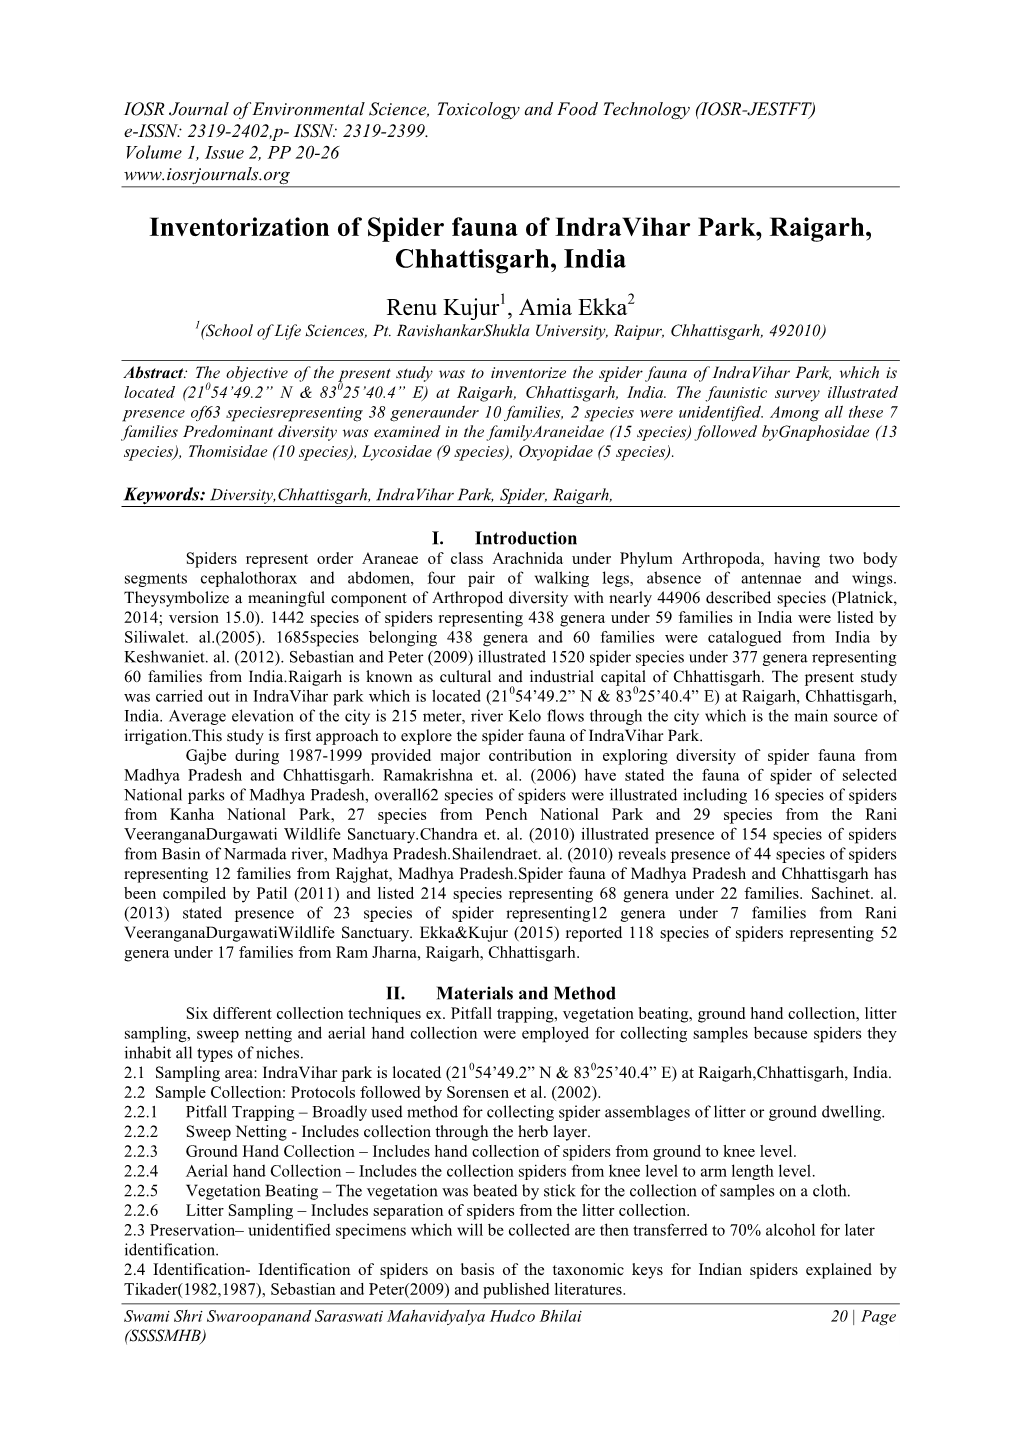 Inventorization of Spider Fauna of Indravihar Park, Raigarh, Chhattisgarh, India